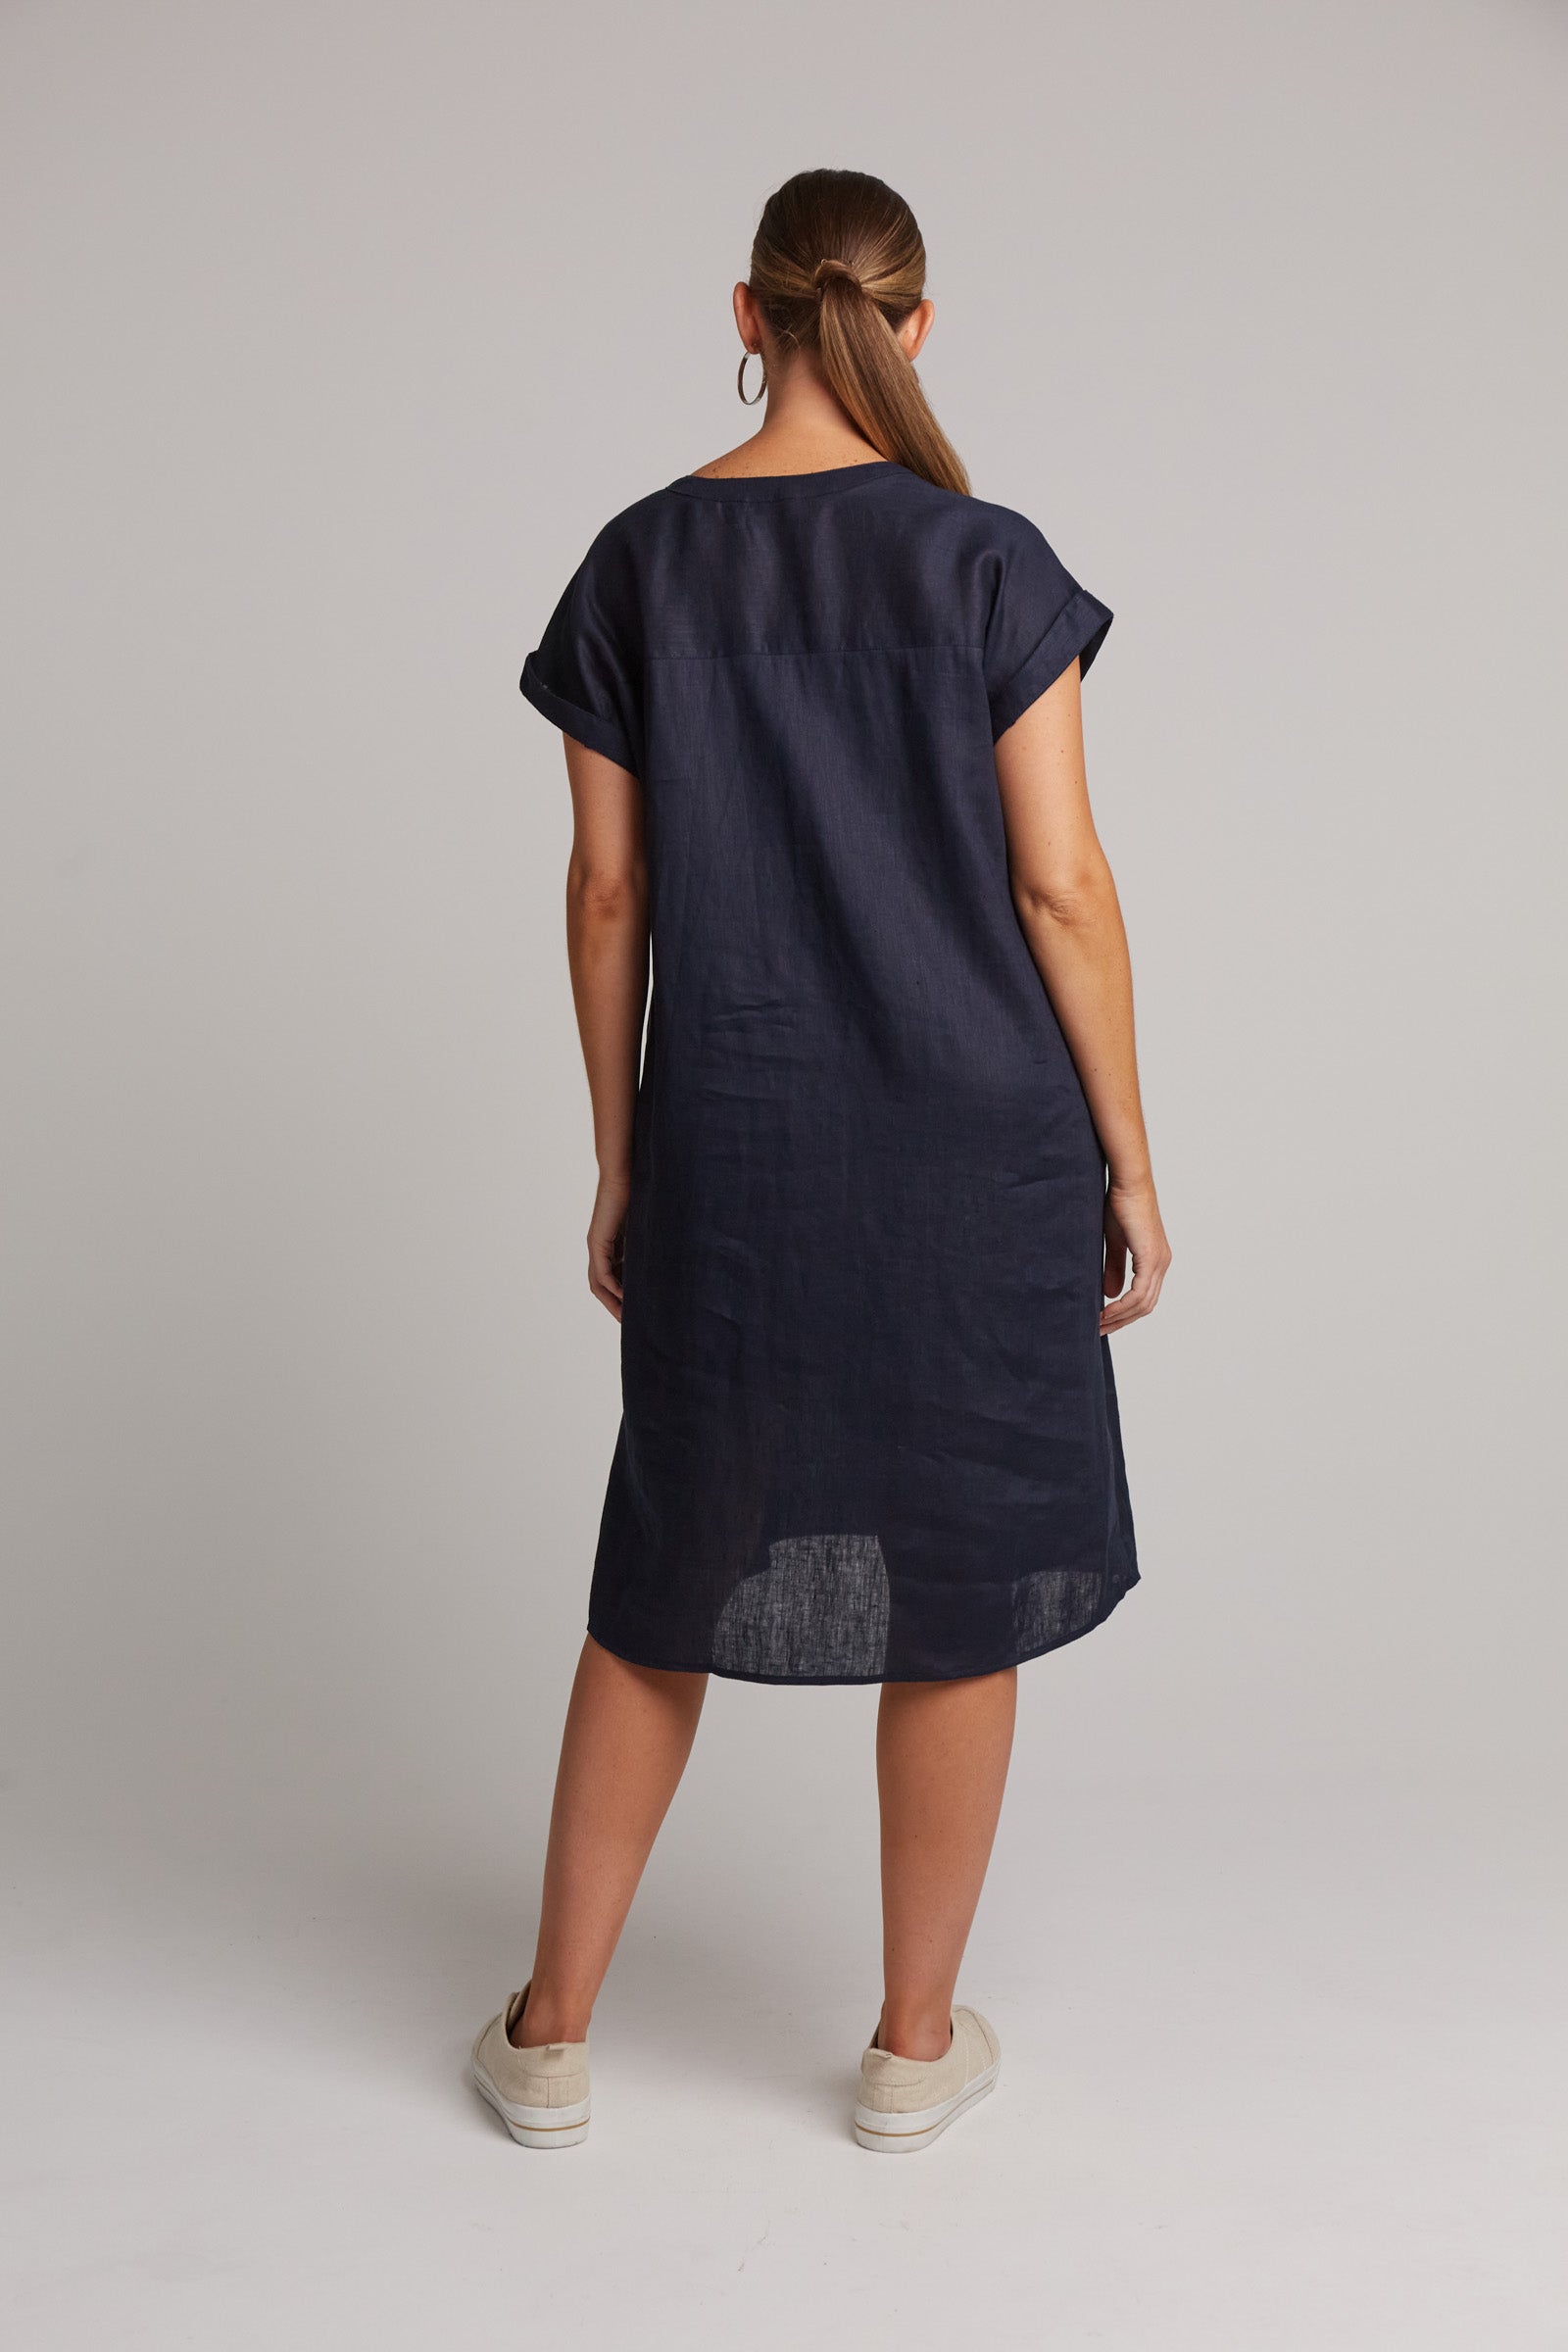 Studio Dress - Navy - eb&ive Clothing - Dress Mid Linen